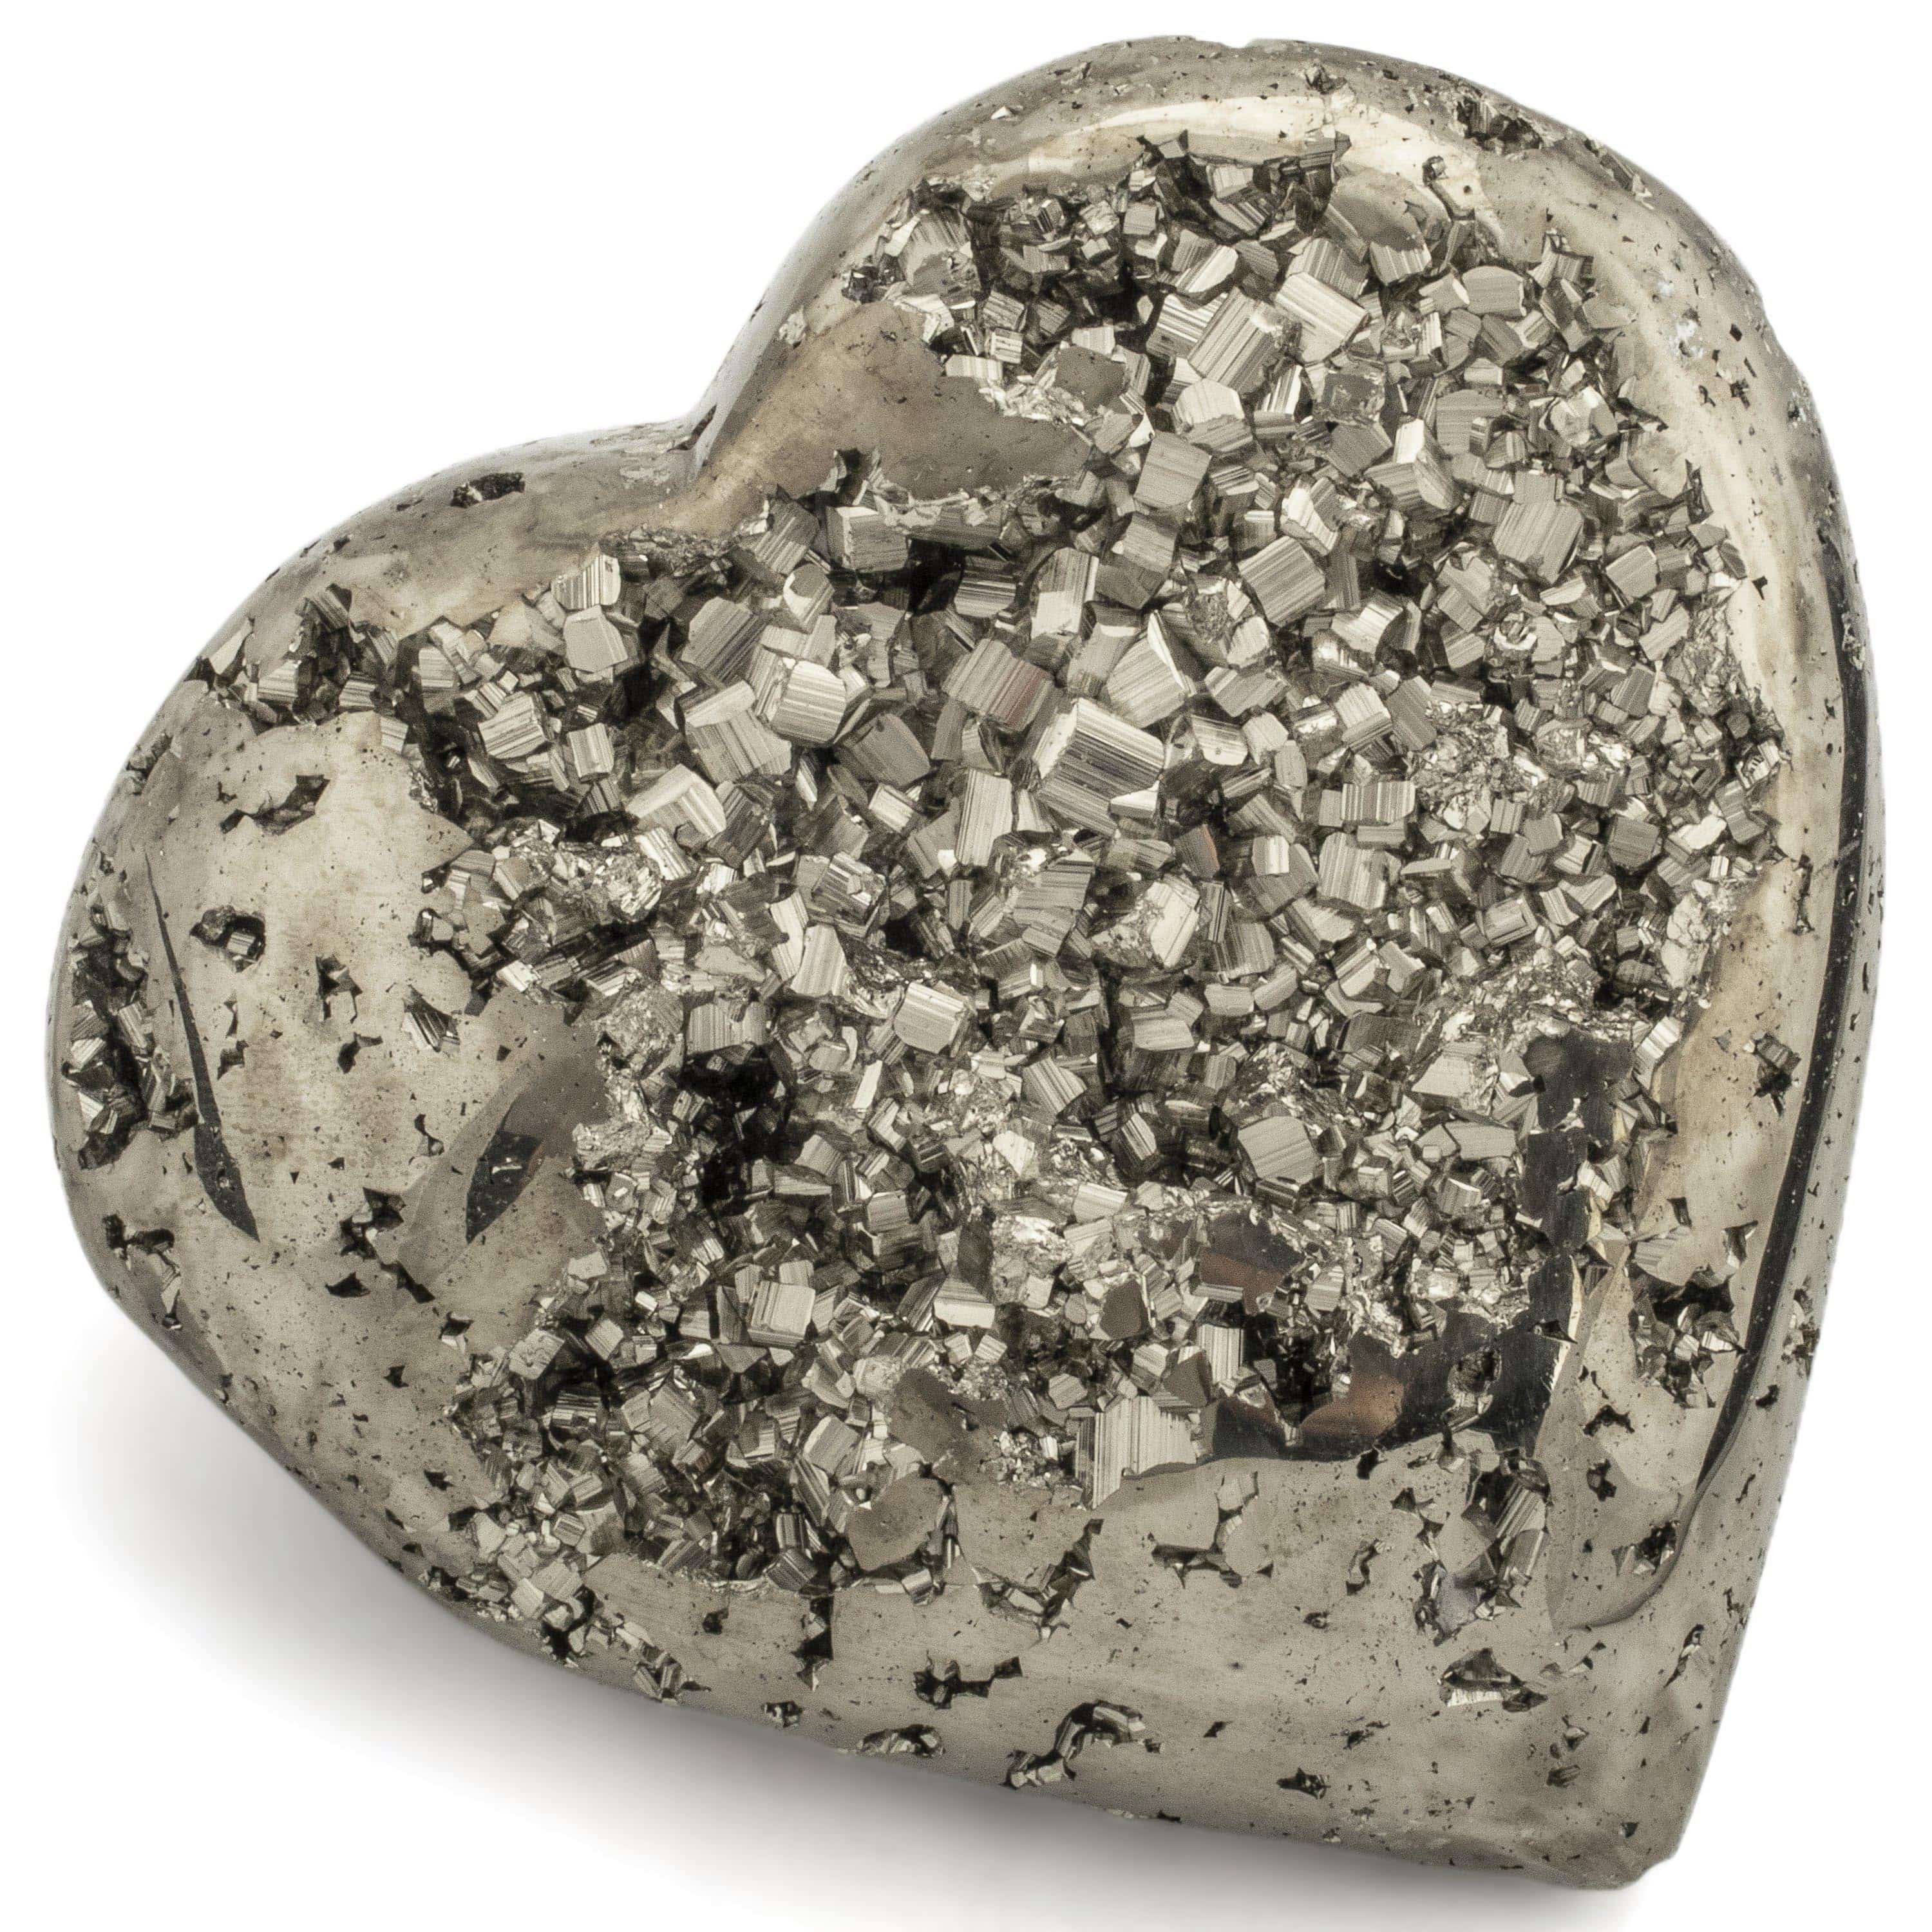 Kalifano Pyrite Pyrite Heart Carving 4.5" / 1,110 grams GH1200-PC.002